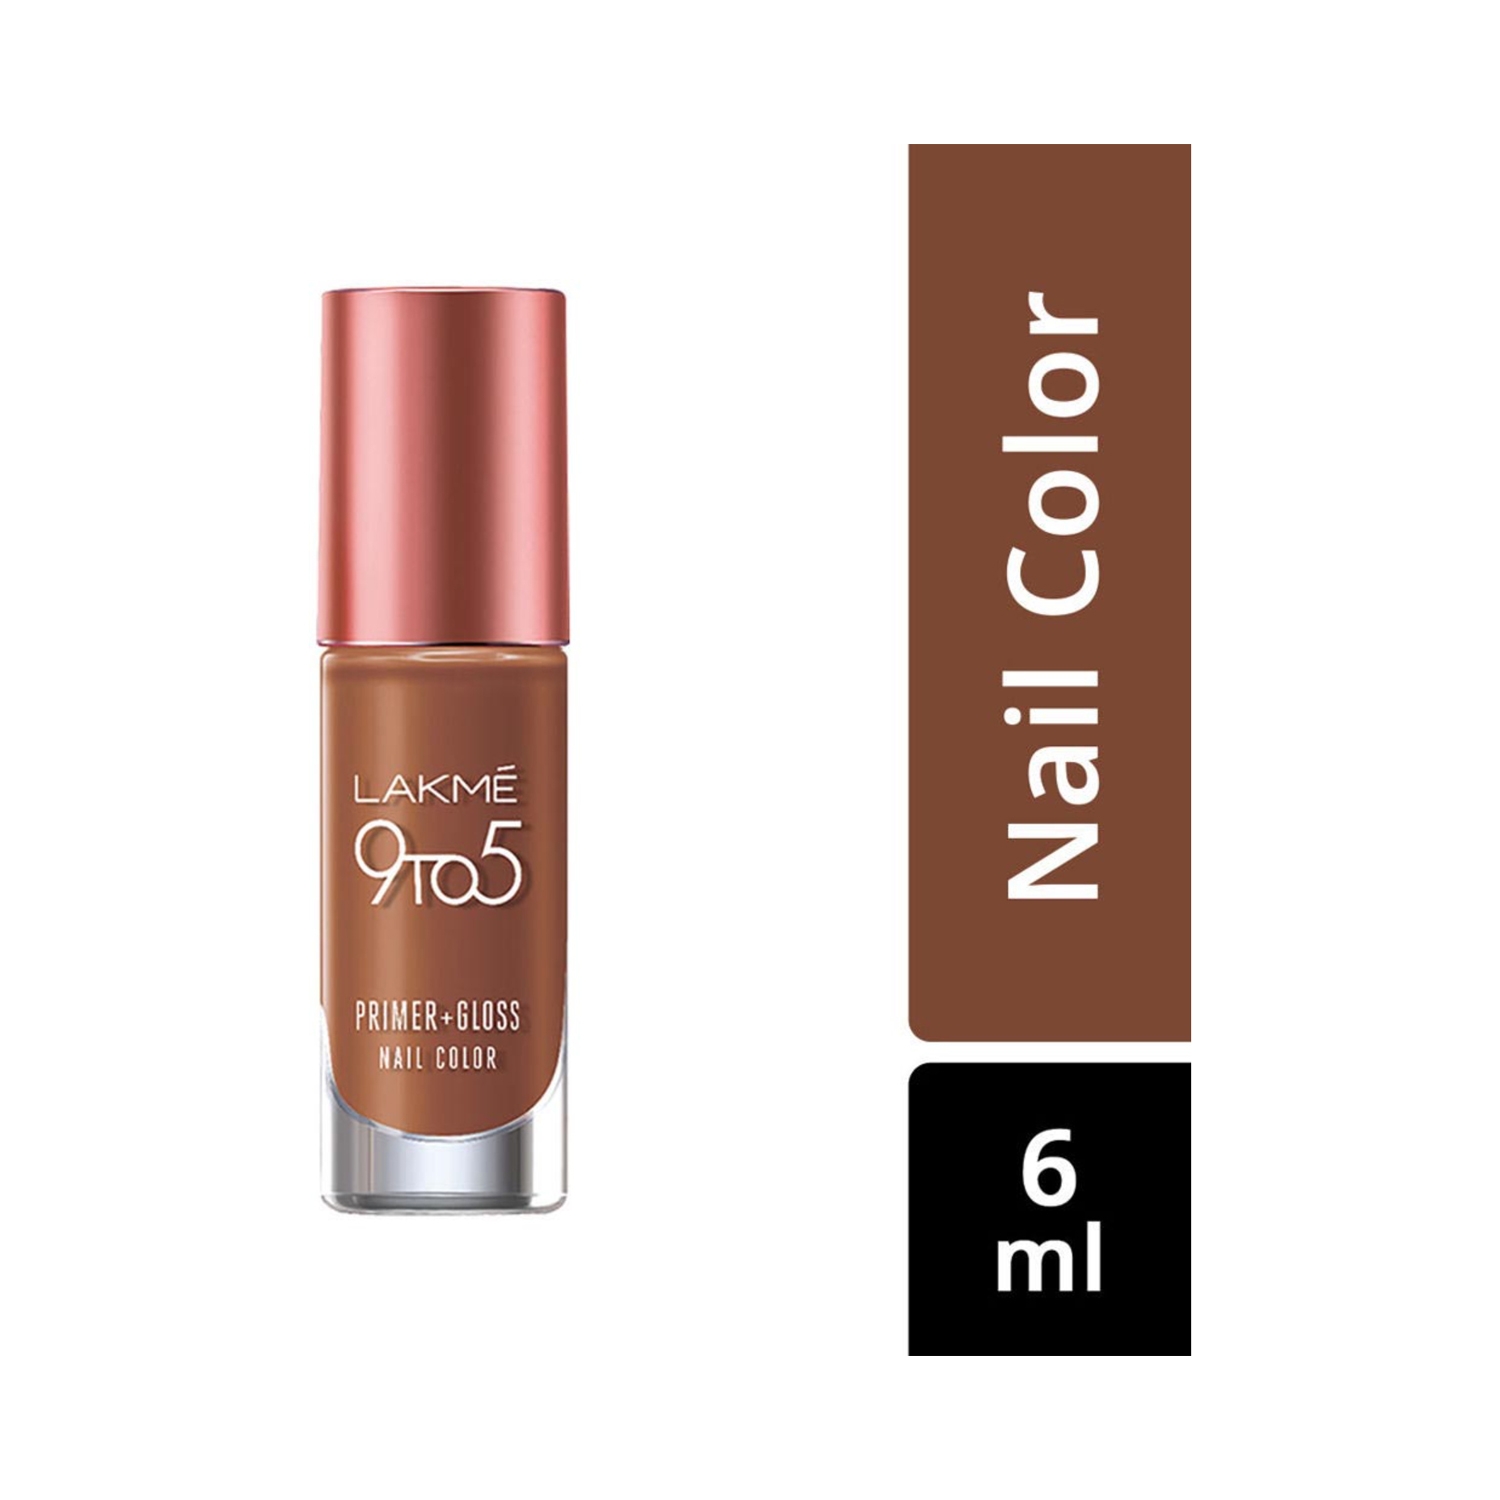 Lakme | Lakme 9 To 5 Primer + Gloss Nail Color - Caramel Case (6ml)